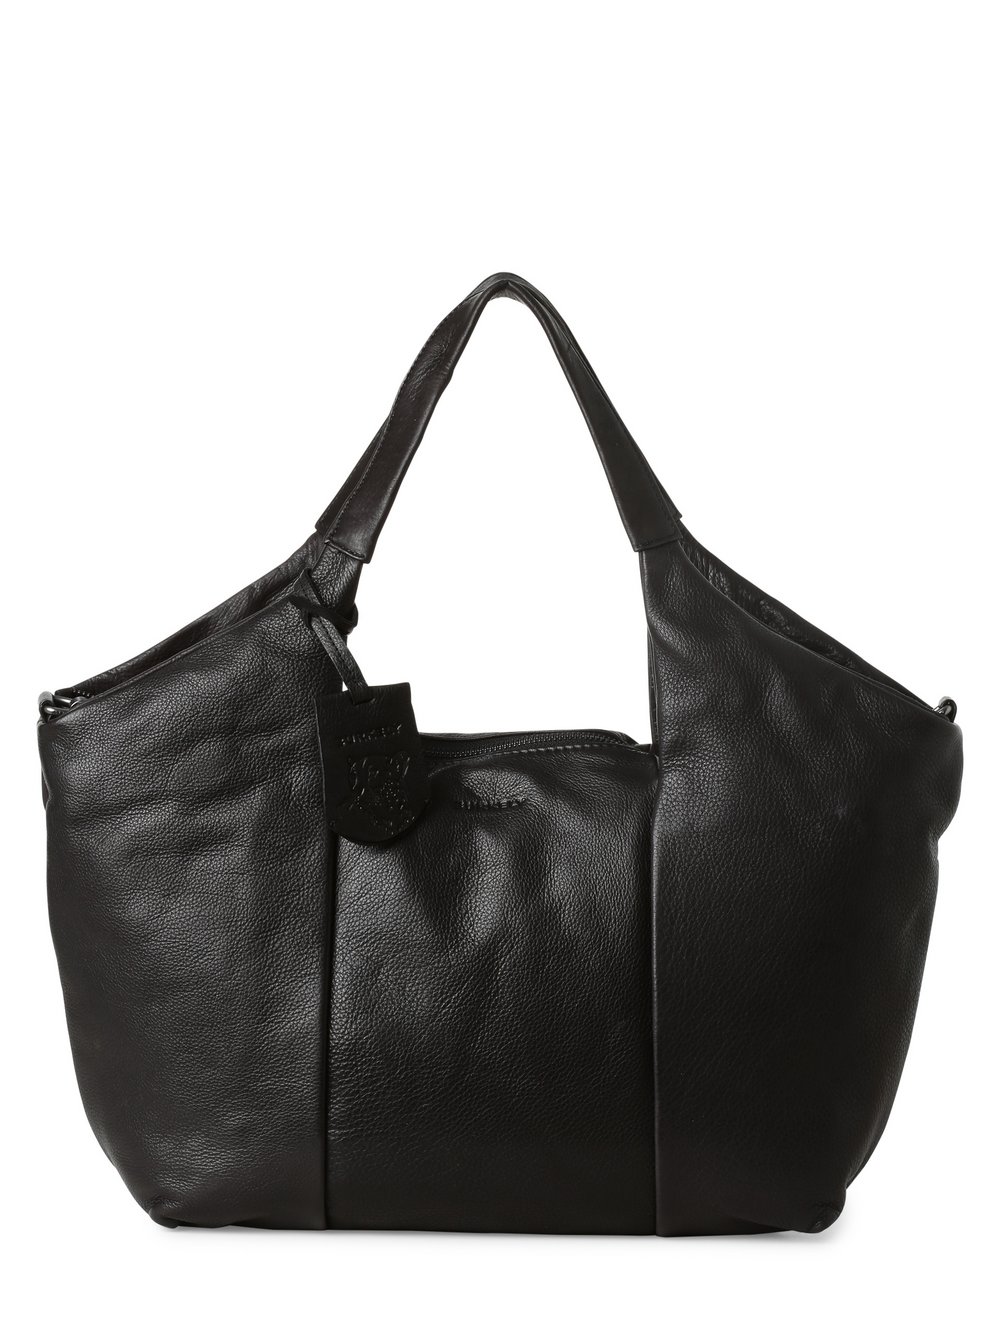 BURKELY - Damska torba shopper, czarny